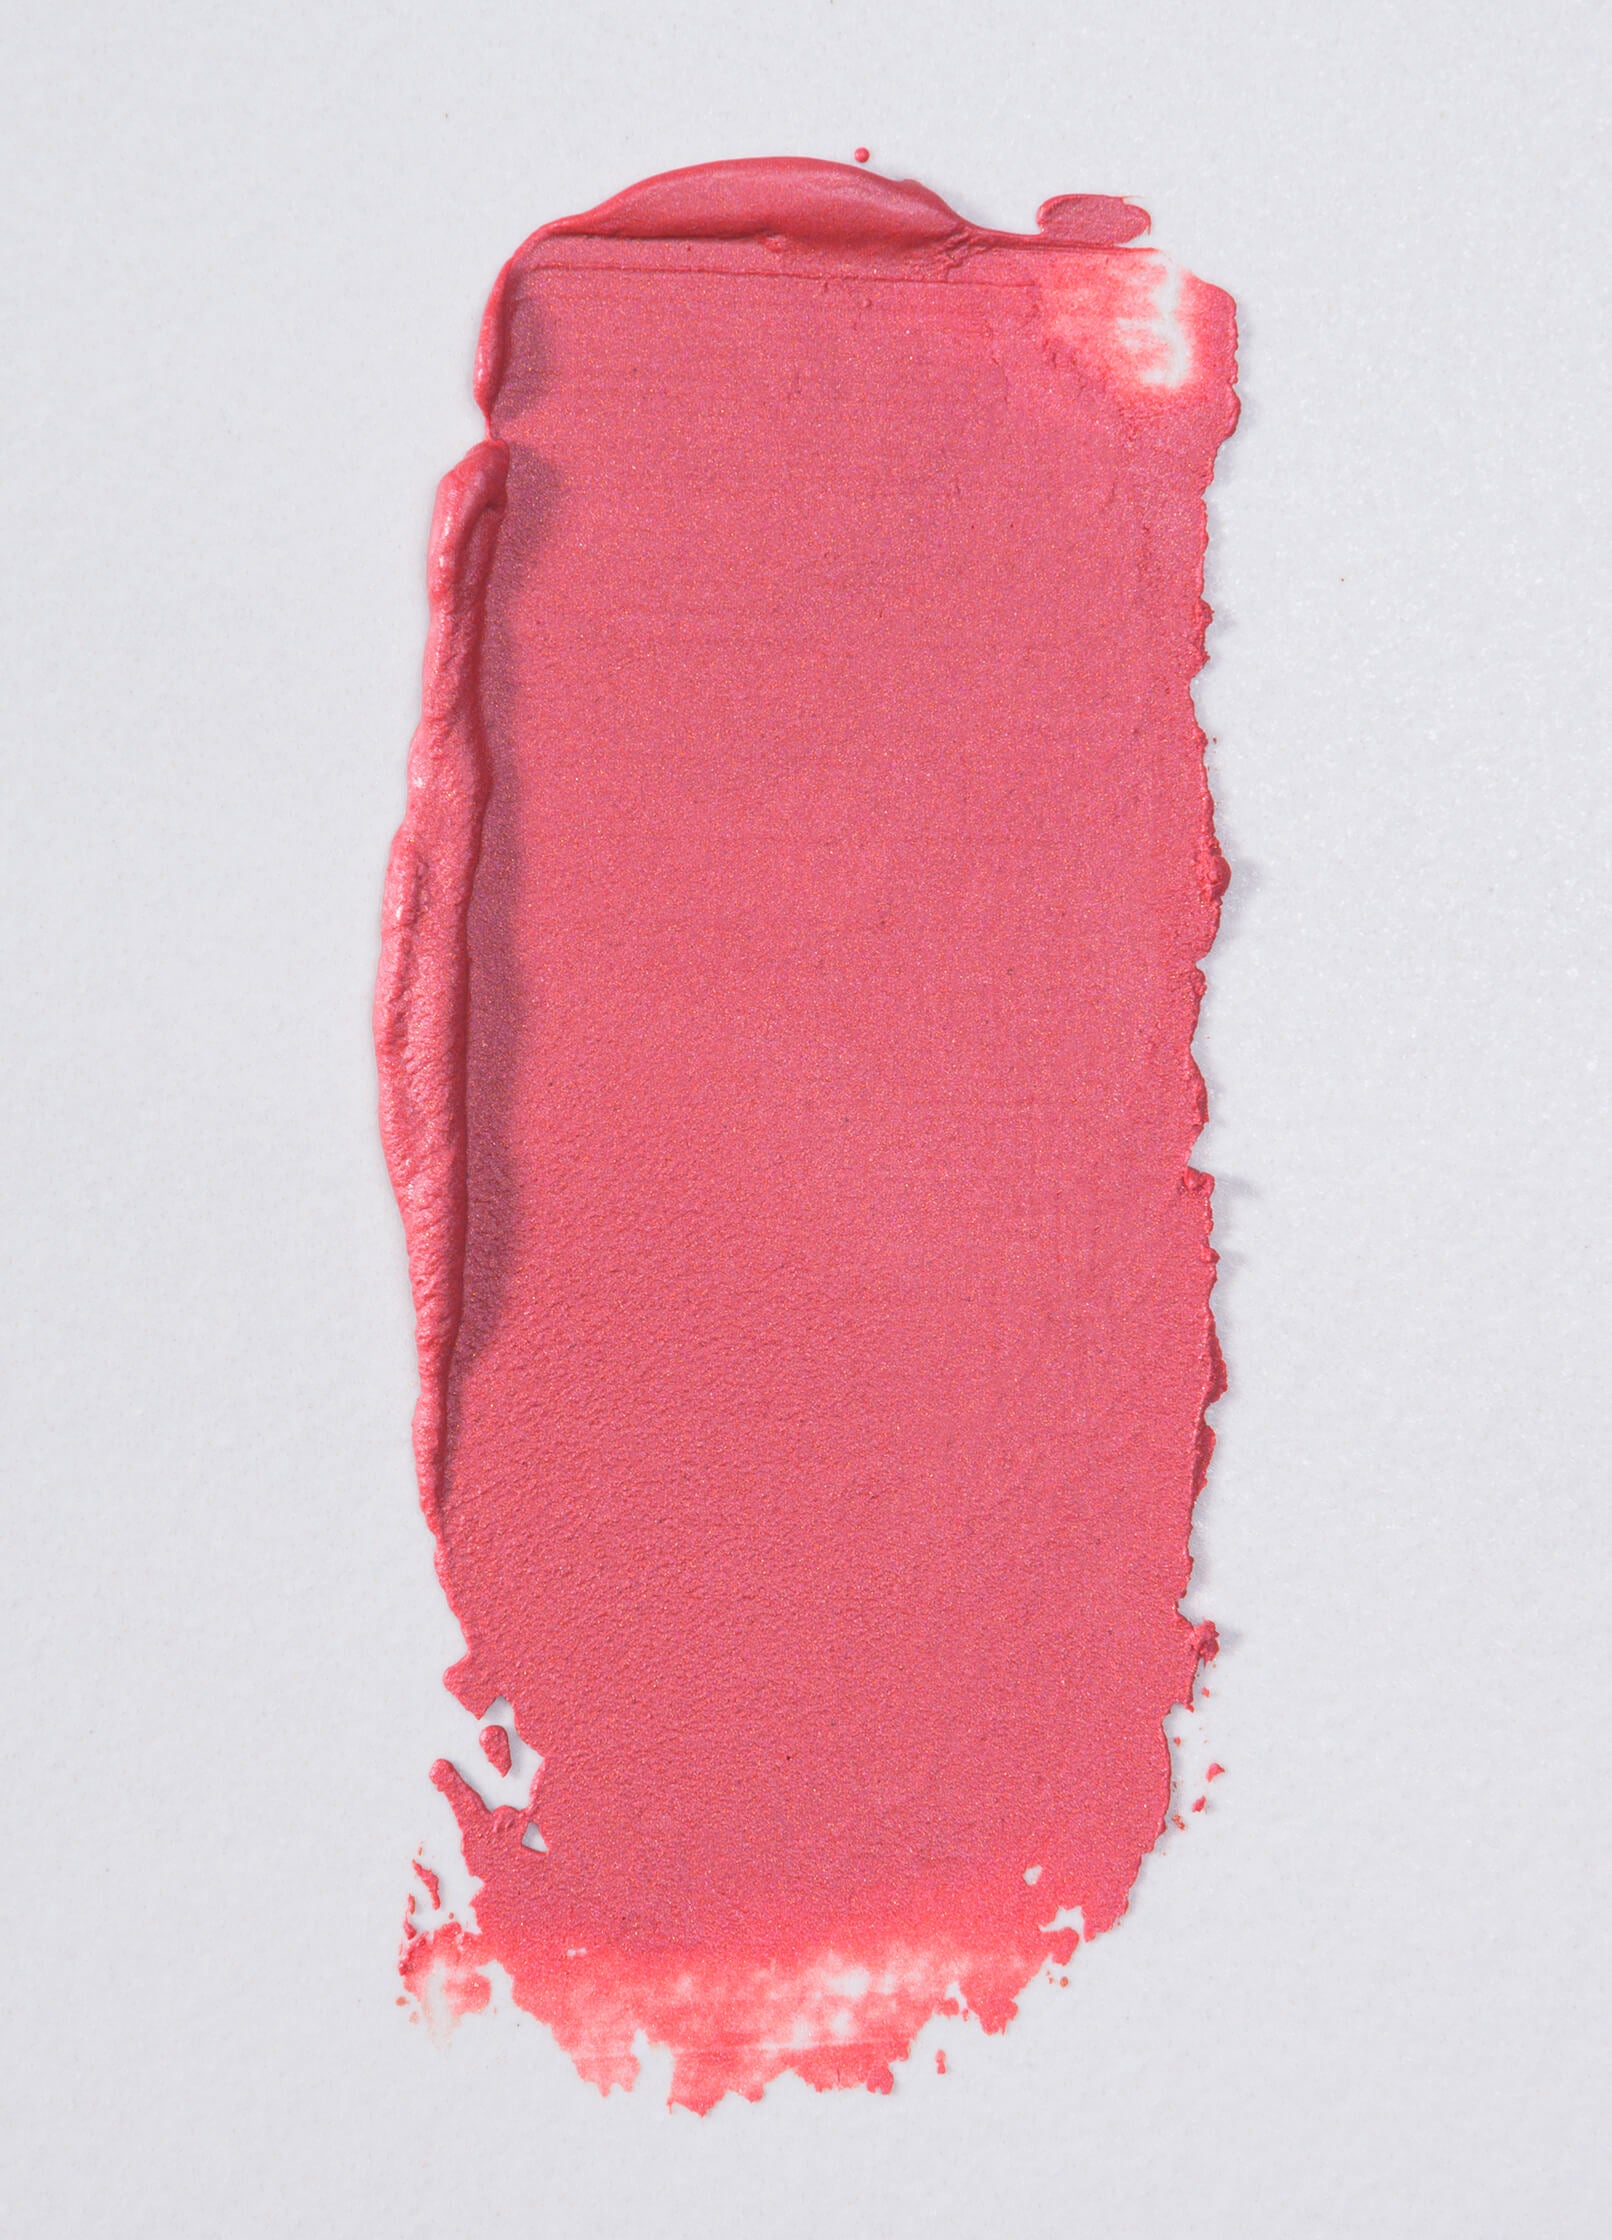 creme blush, cream blush vegan cruelty free refillable makeup #shade_Love_|_Bright_Neutral_Pink